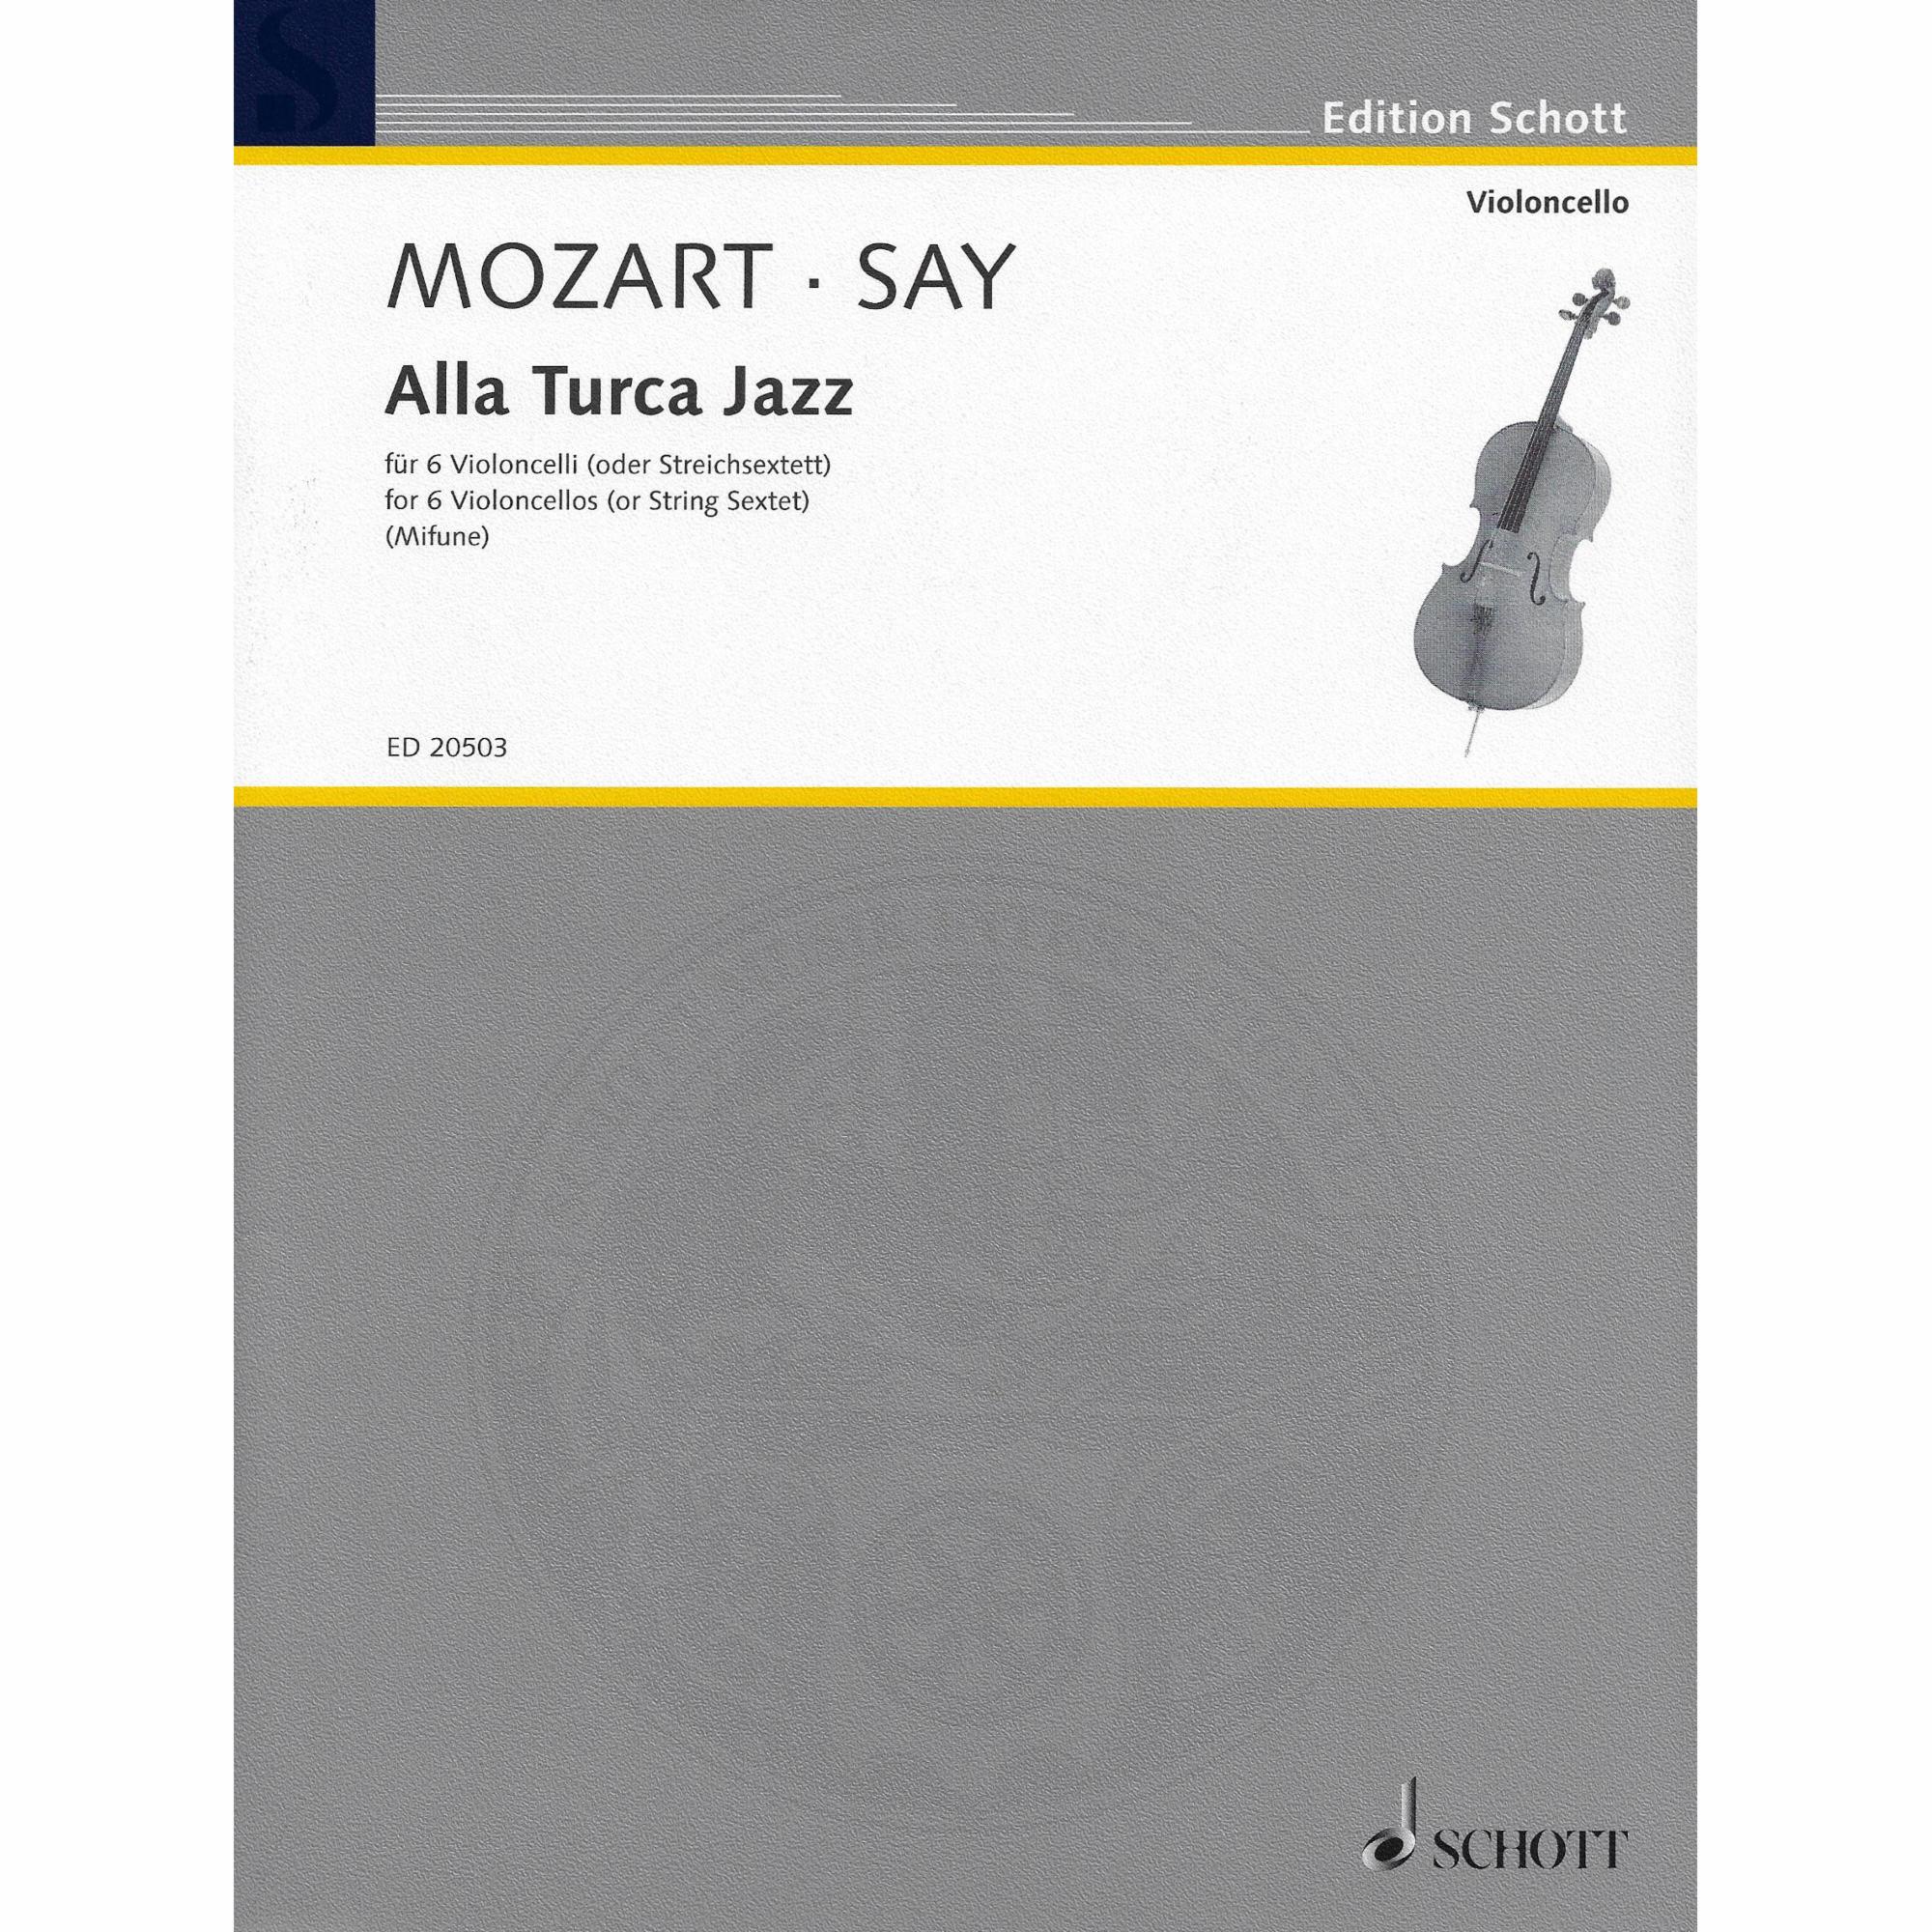 Mozart/Say -- Alla Turca Jazz for Six Cellos or String Sextet